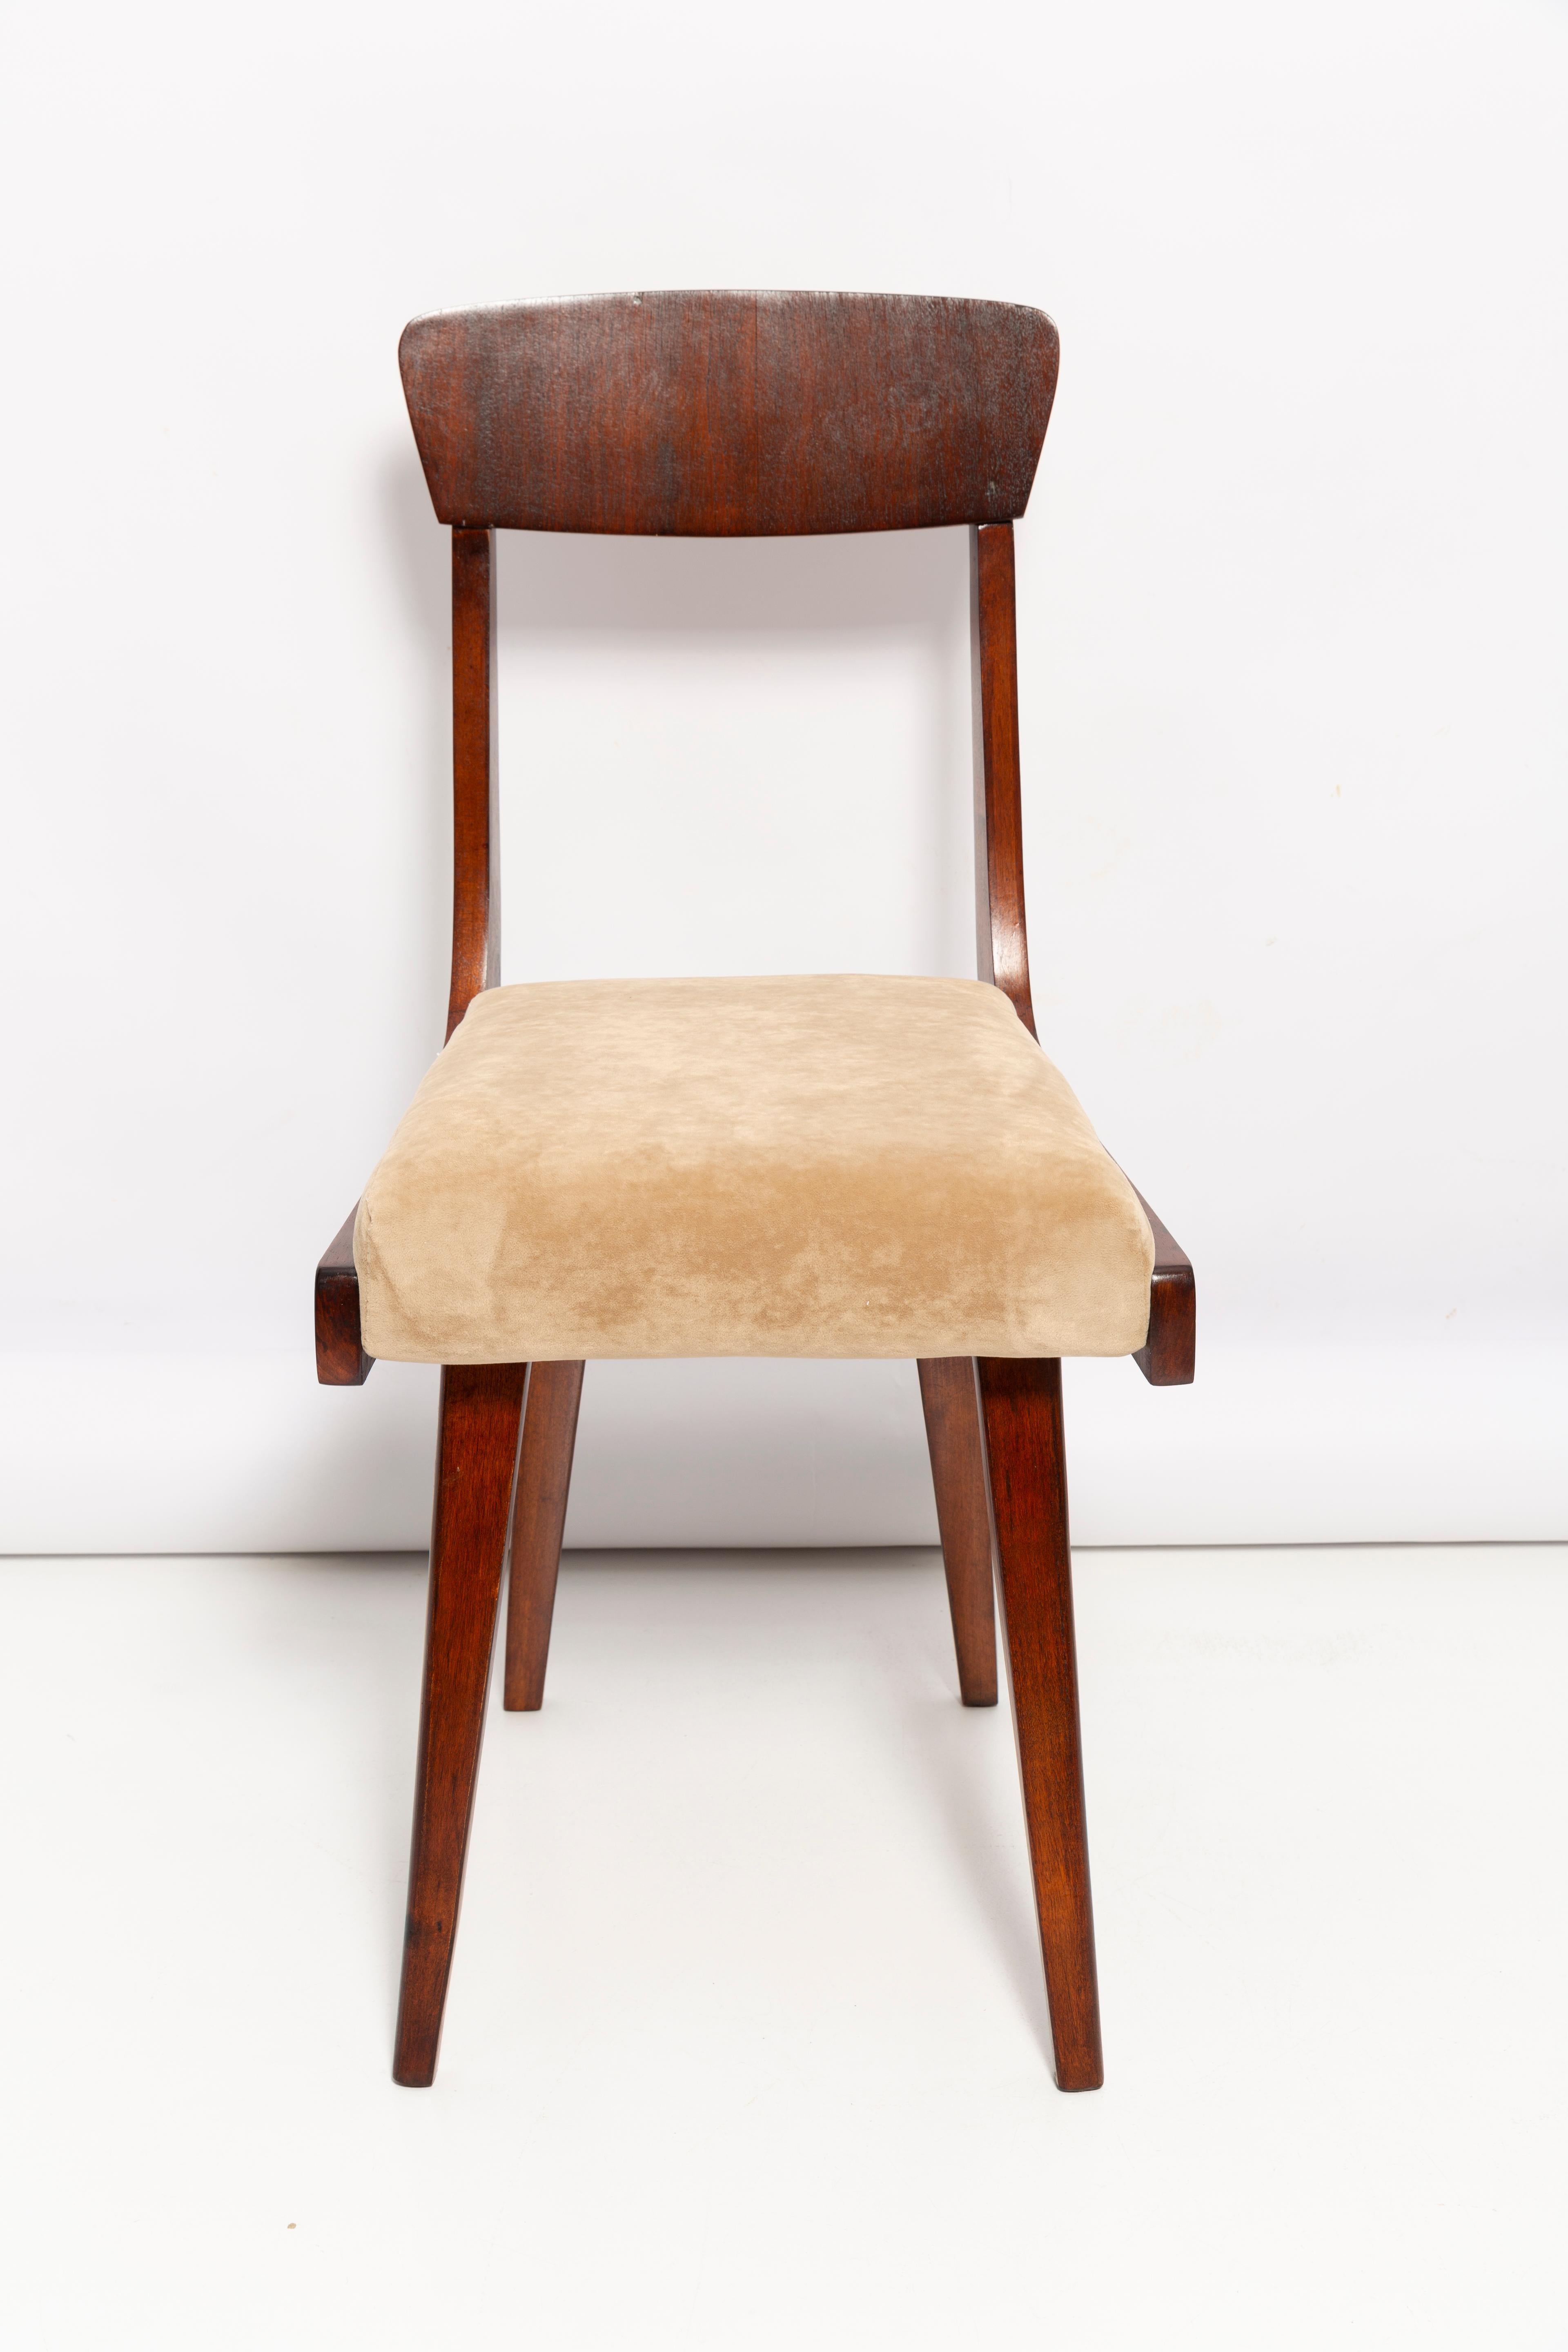 20th Century Mid Century Gazelle Beige Wood Chair, Europe, 1960s For Sale